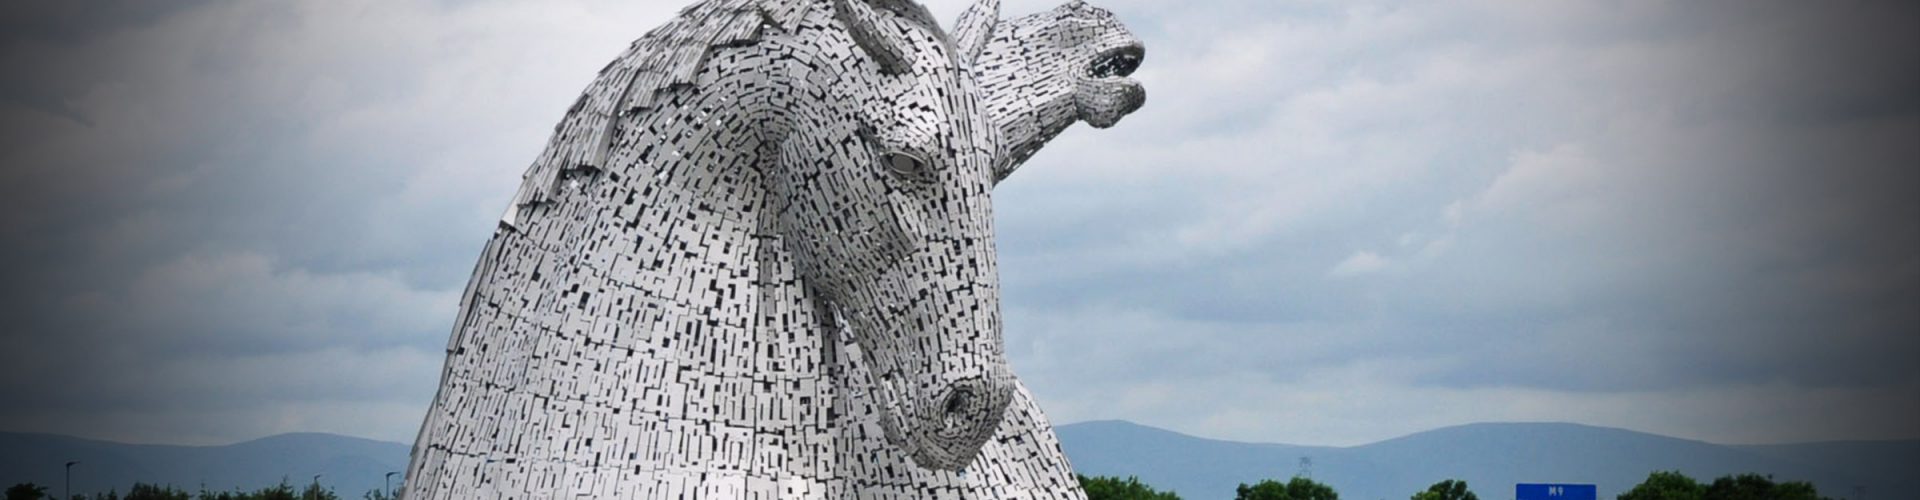 View of The Kelpies horses head figures in Falkirk